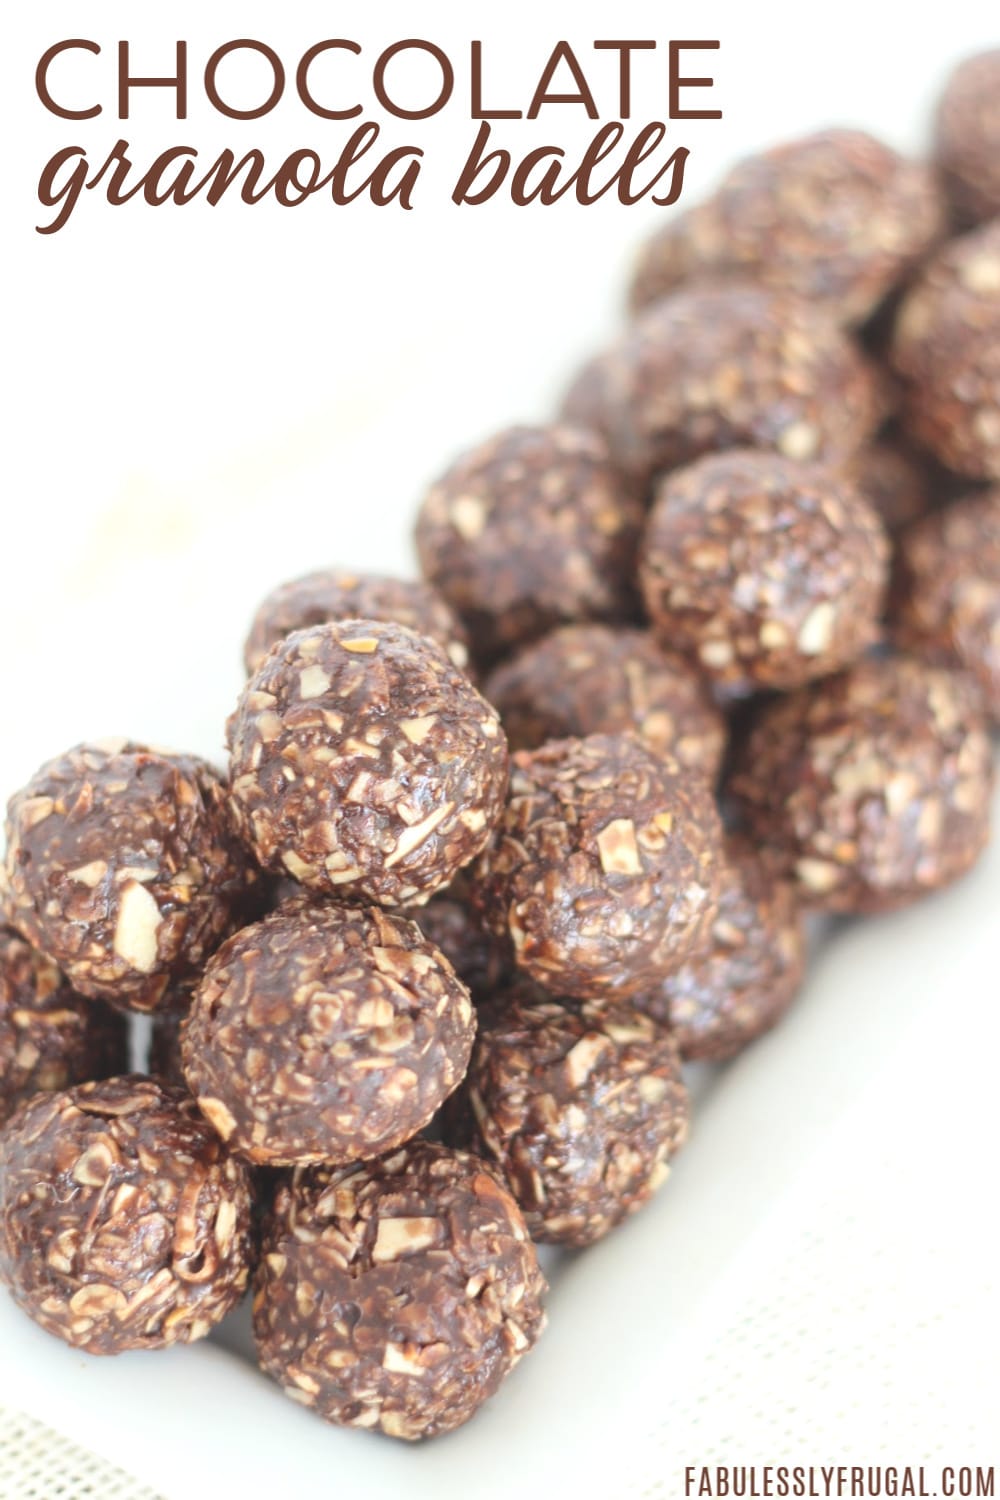 Chocolate granola balls recipe